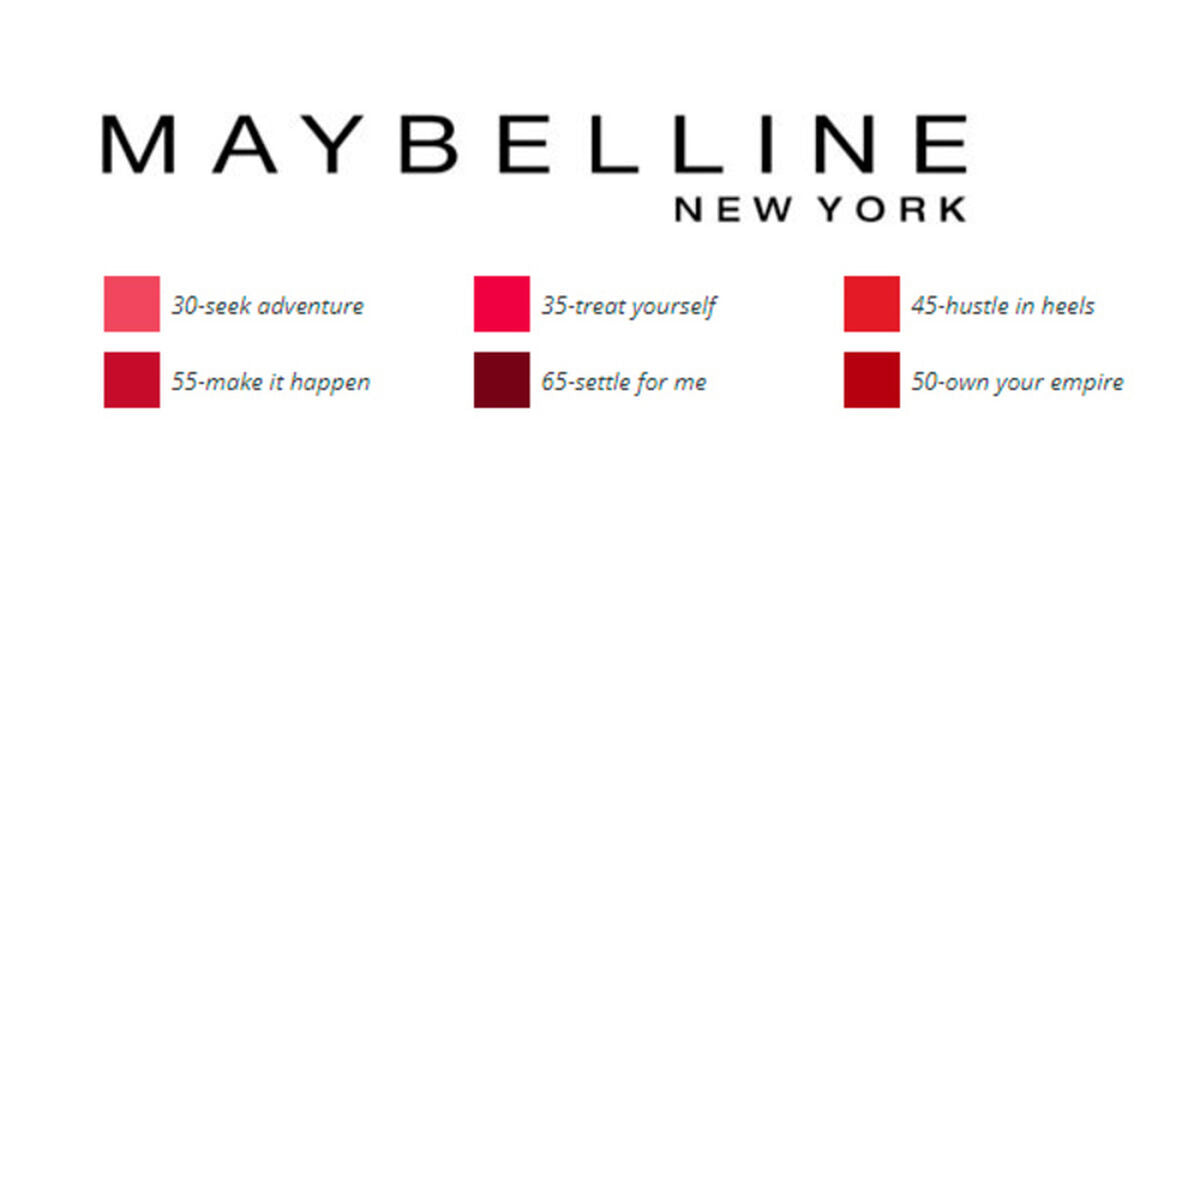 Lipstick Superstay Ink Maybelline | Maybelline | Aylal Beauty